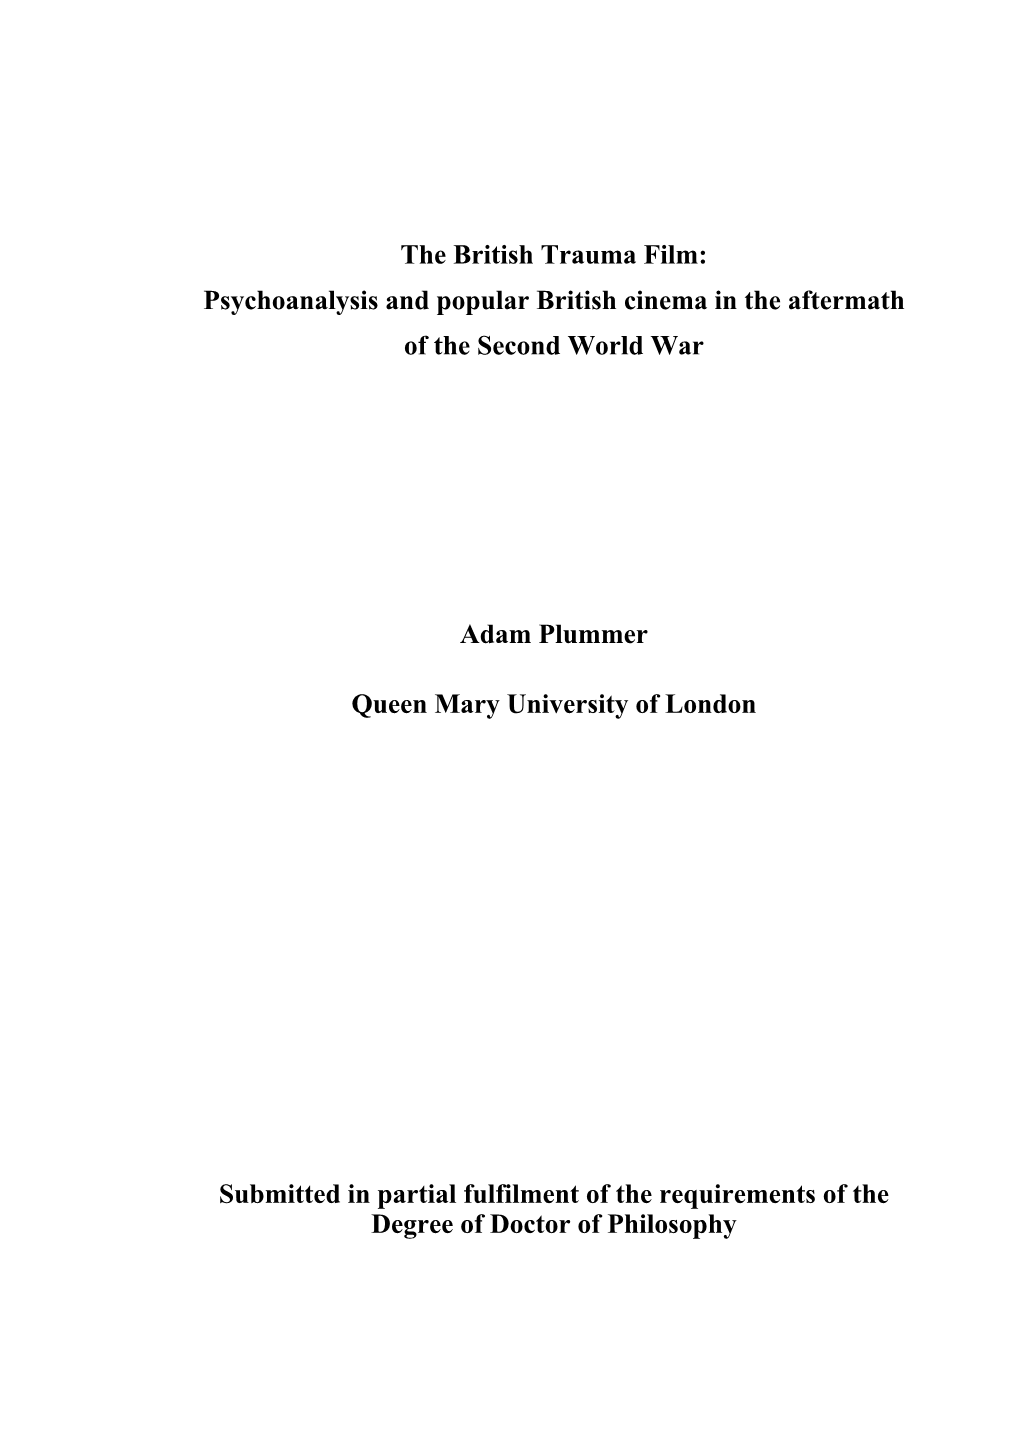 The British Trauma Film: Psychoanalysis and Popular British Cinema in the Aftermath of the Second World War